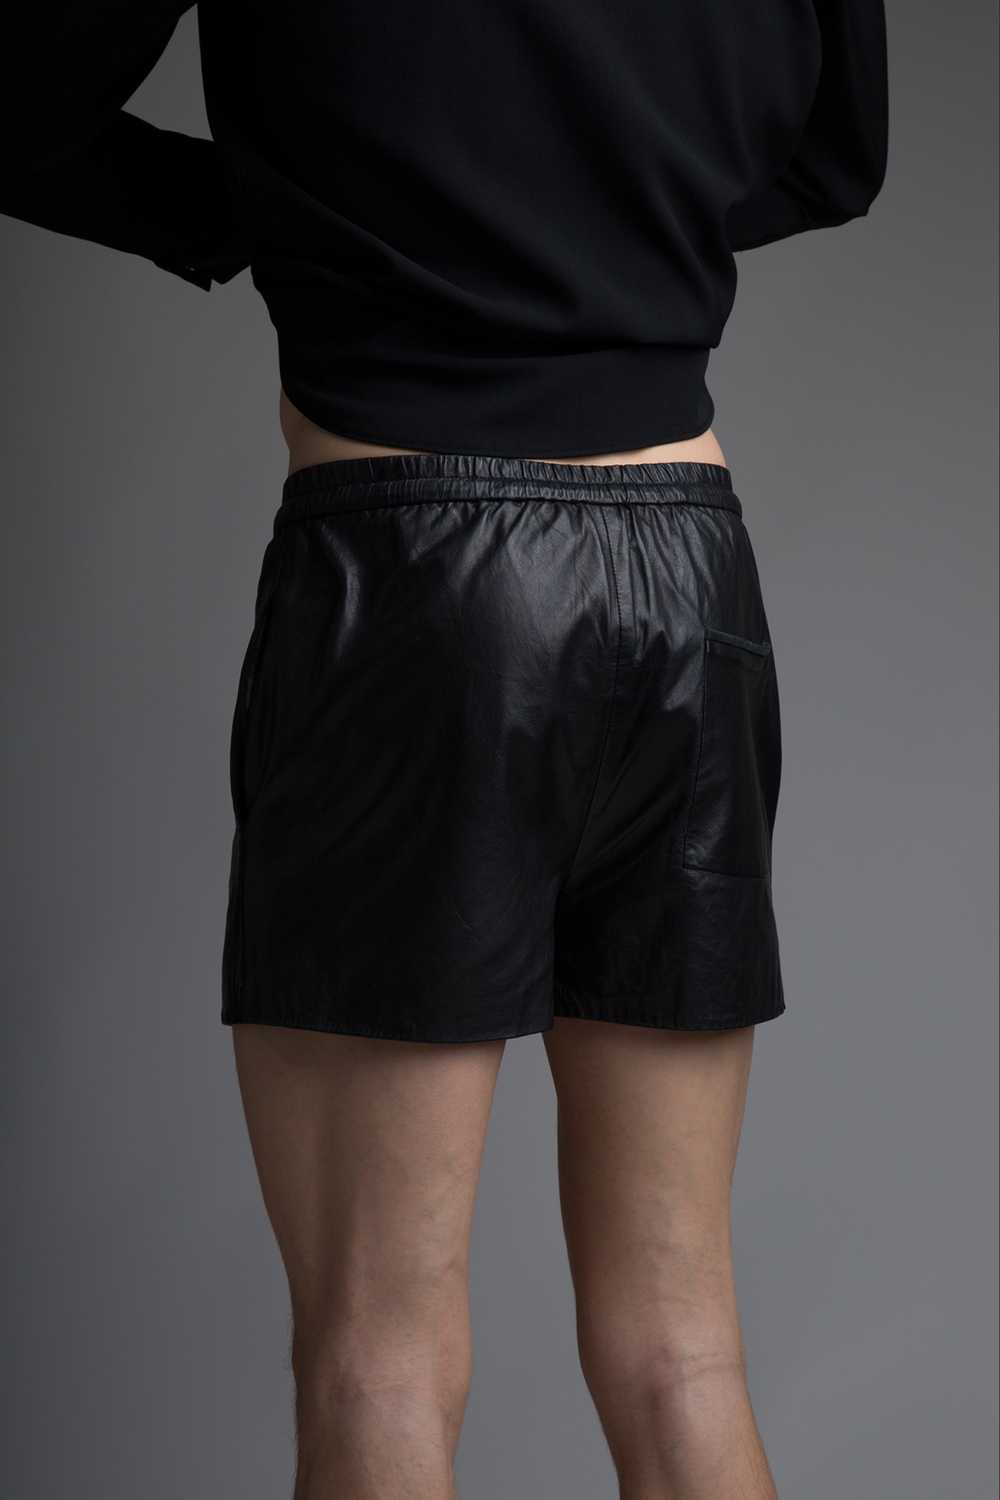 Phillip Lim Leather Gym Shorts - image 5